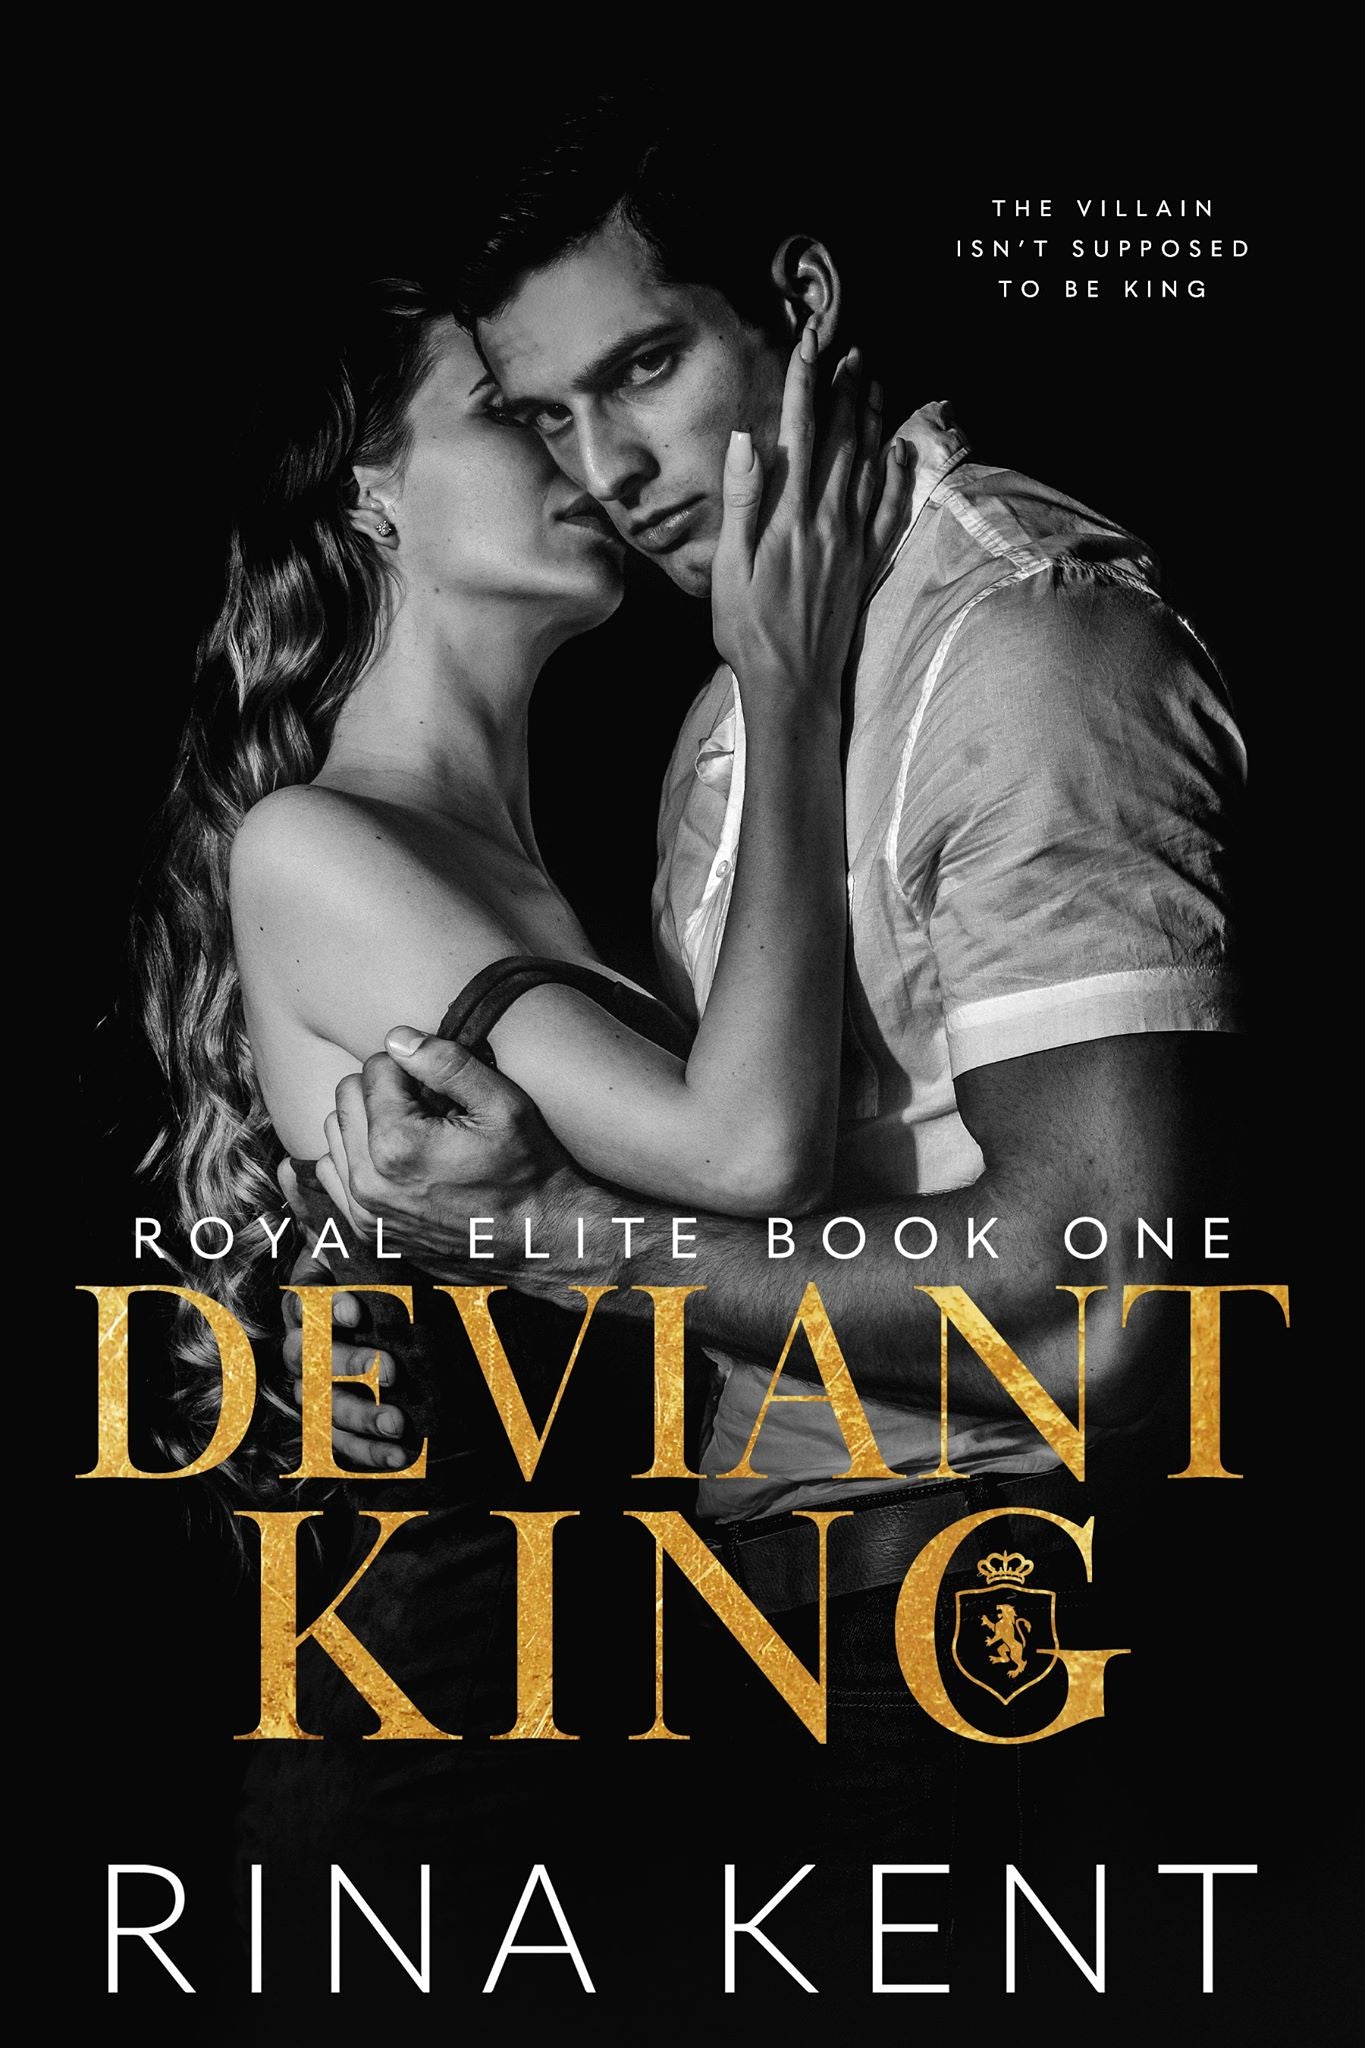 Deviant King - Rina Kent